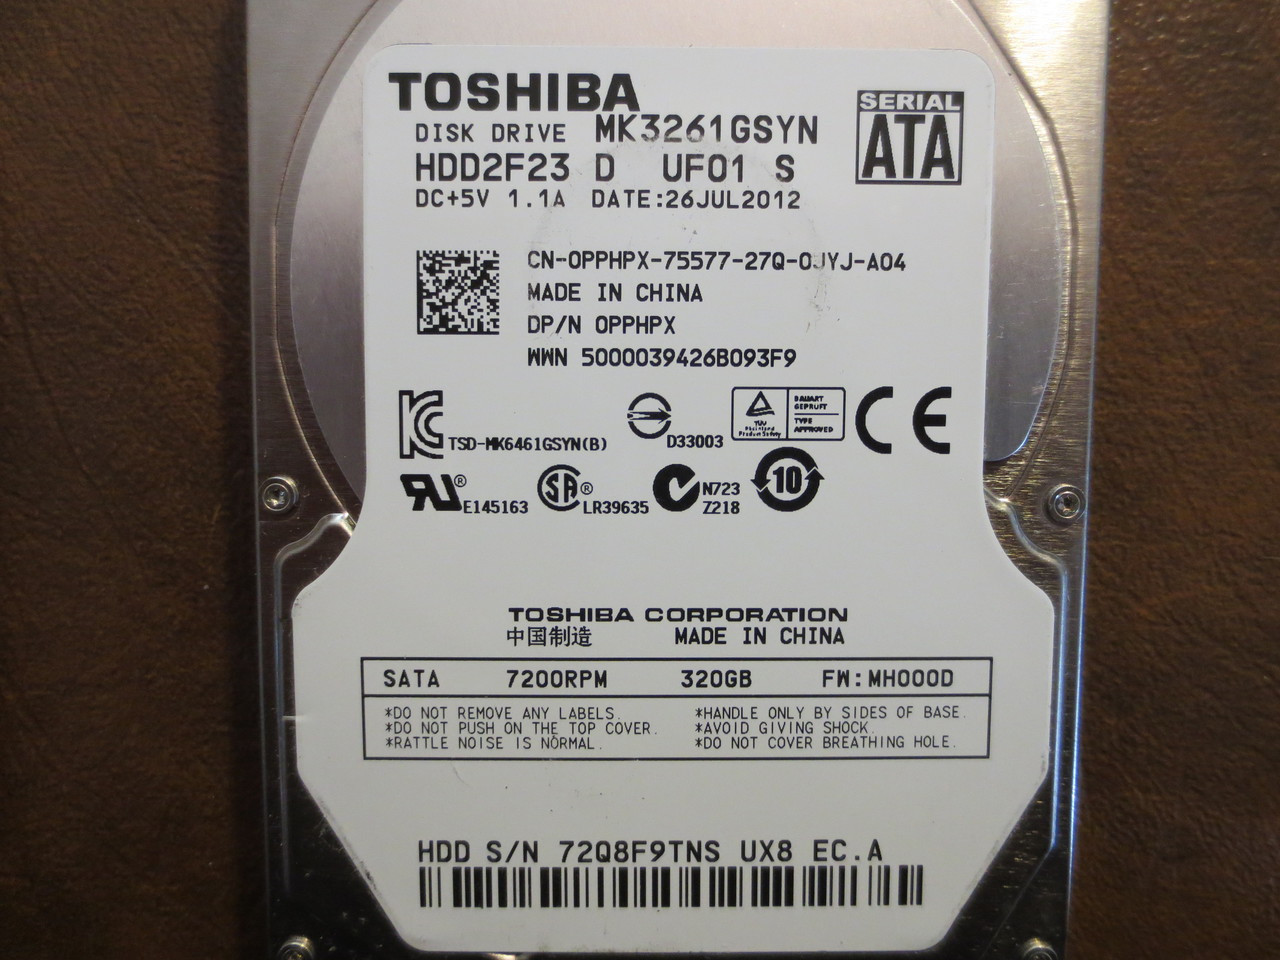 Toshiba MK3261GSYN HDD2F23 D UF01 S FW:MH000D 320gb Sata - Effective  Electronics